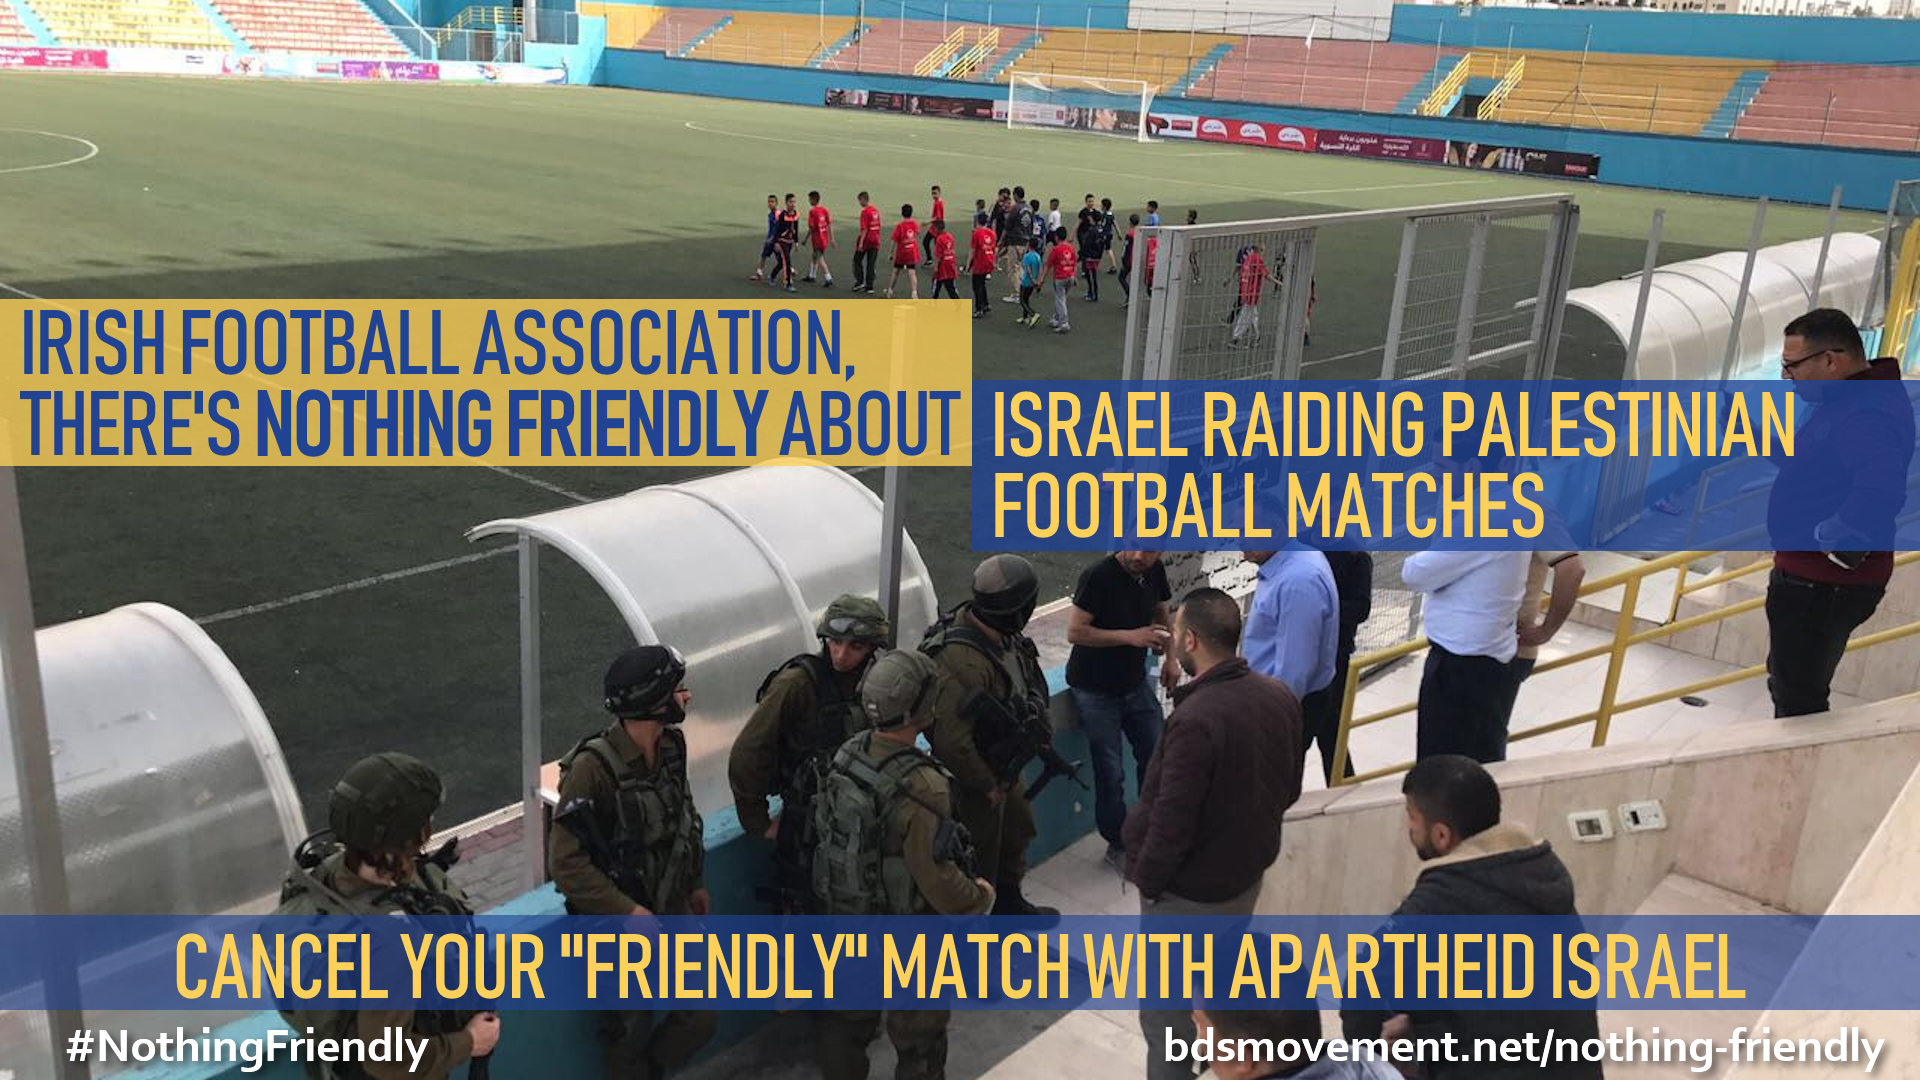 Irish Football Assoc, there's nothing friendly about raiding Palestinian football matches